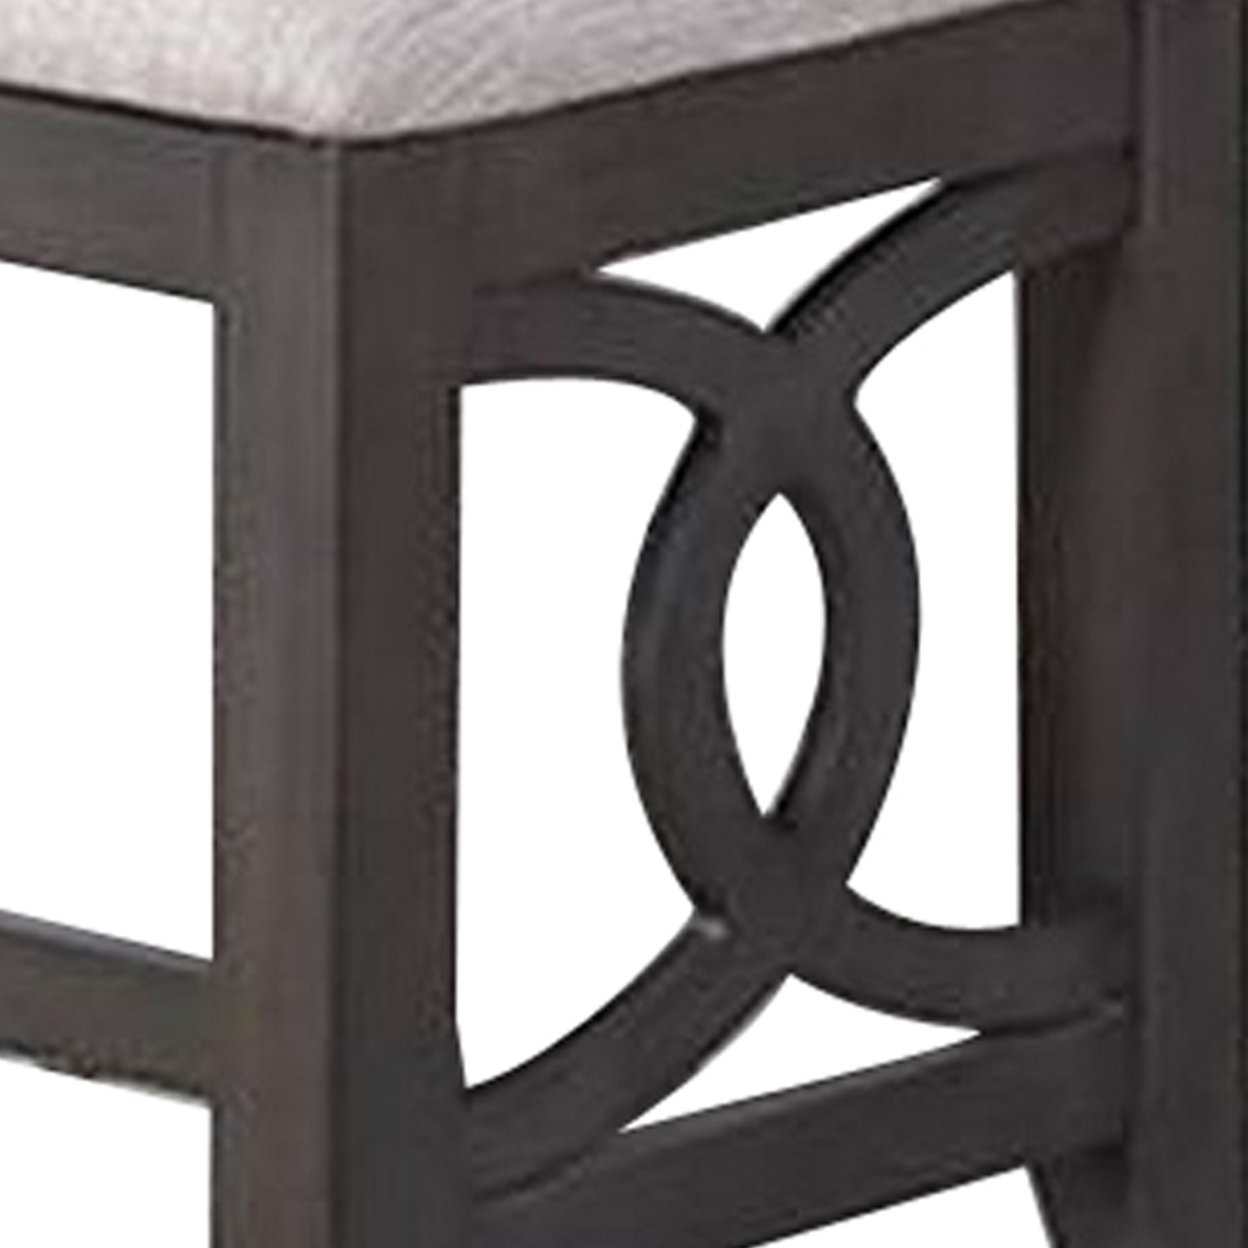 Ivy 50 Inch Modern Fabric Upholstered Dining Bench, Rubberwood Frame, Gray- Saltoro Sherpi